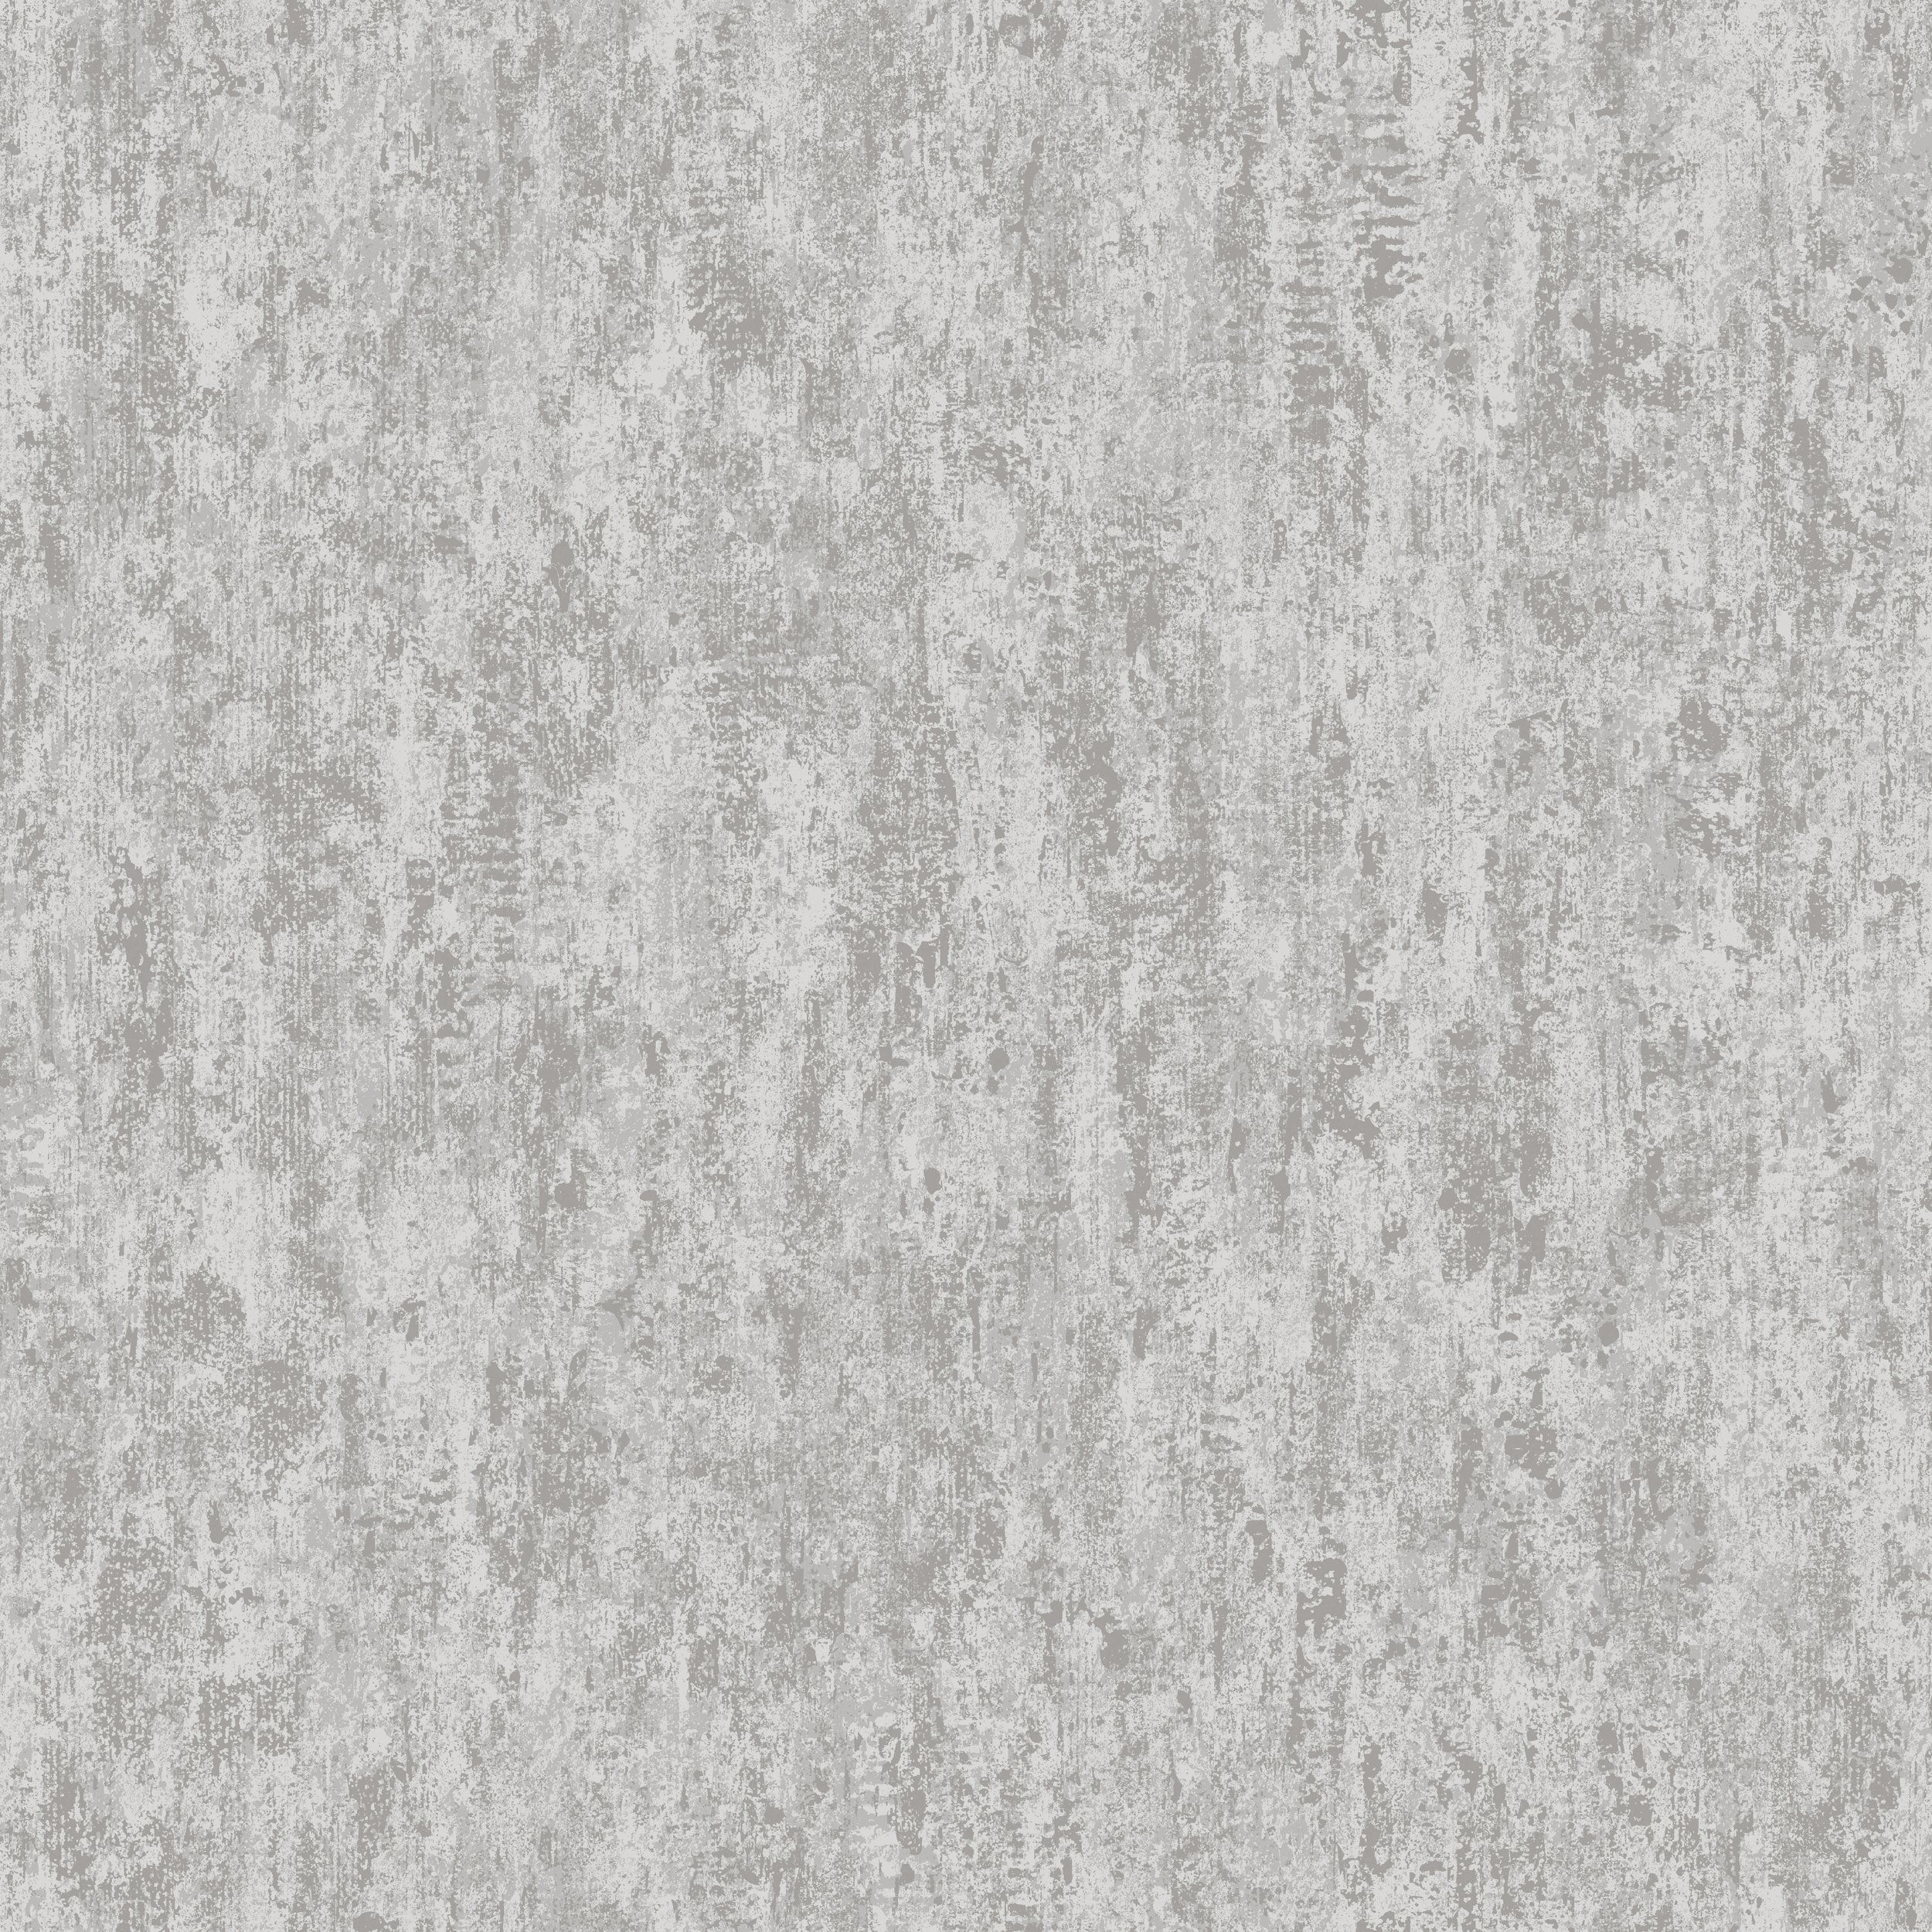 Industrial Texture Silver Grey .wonderwallfashions.com · In Stock